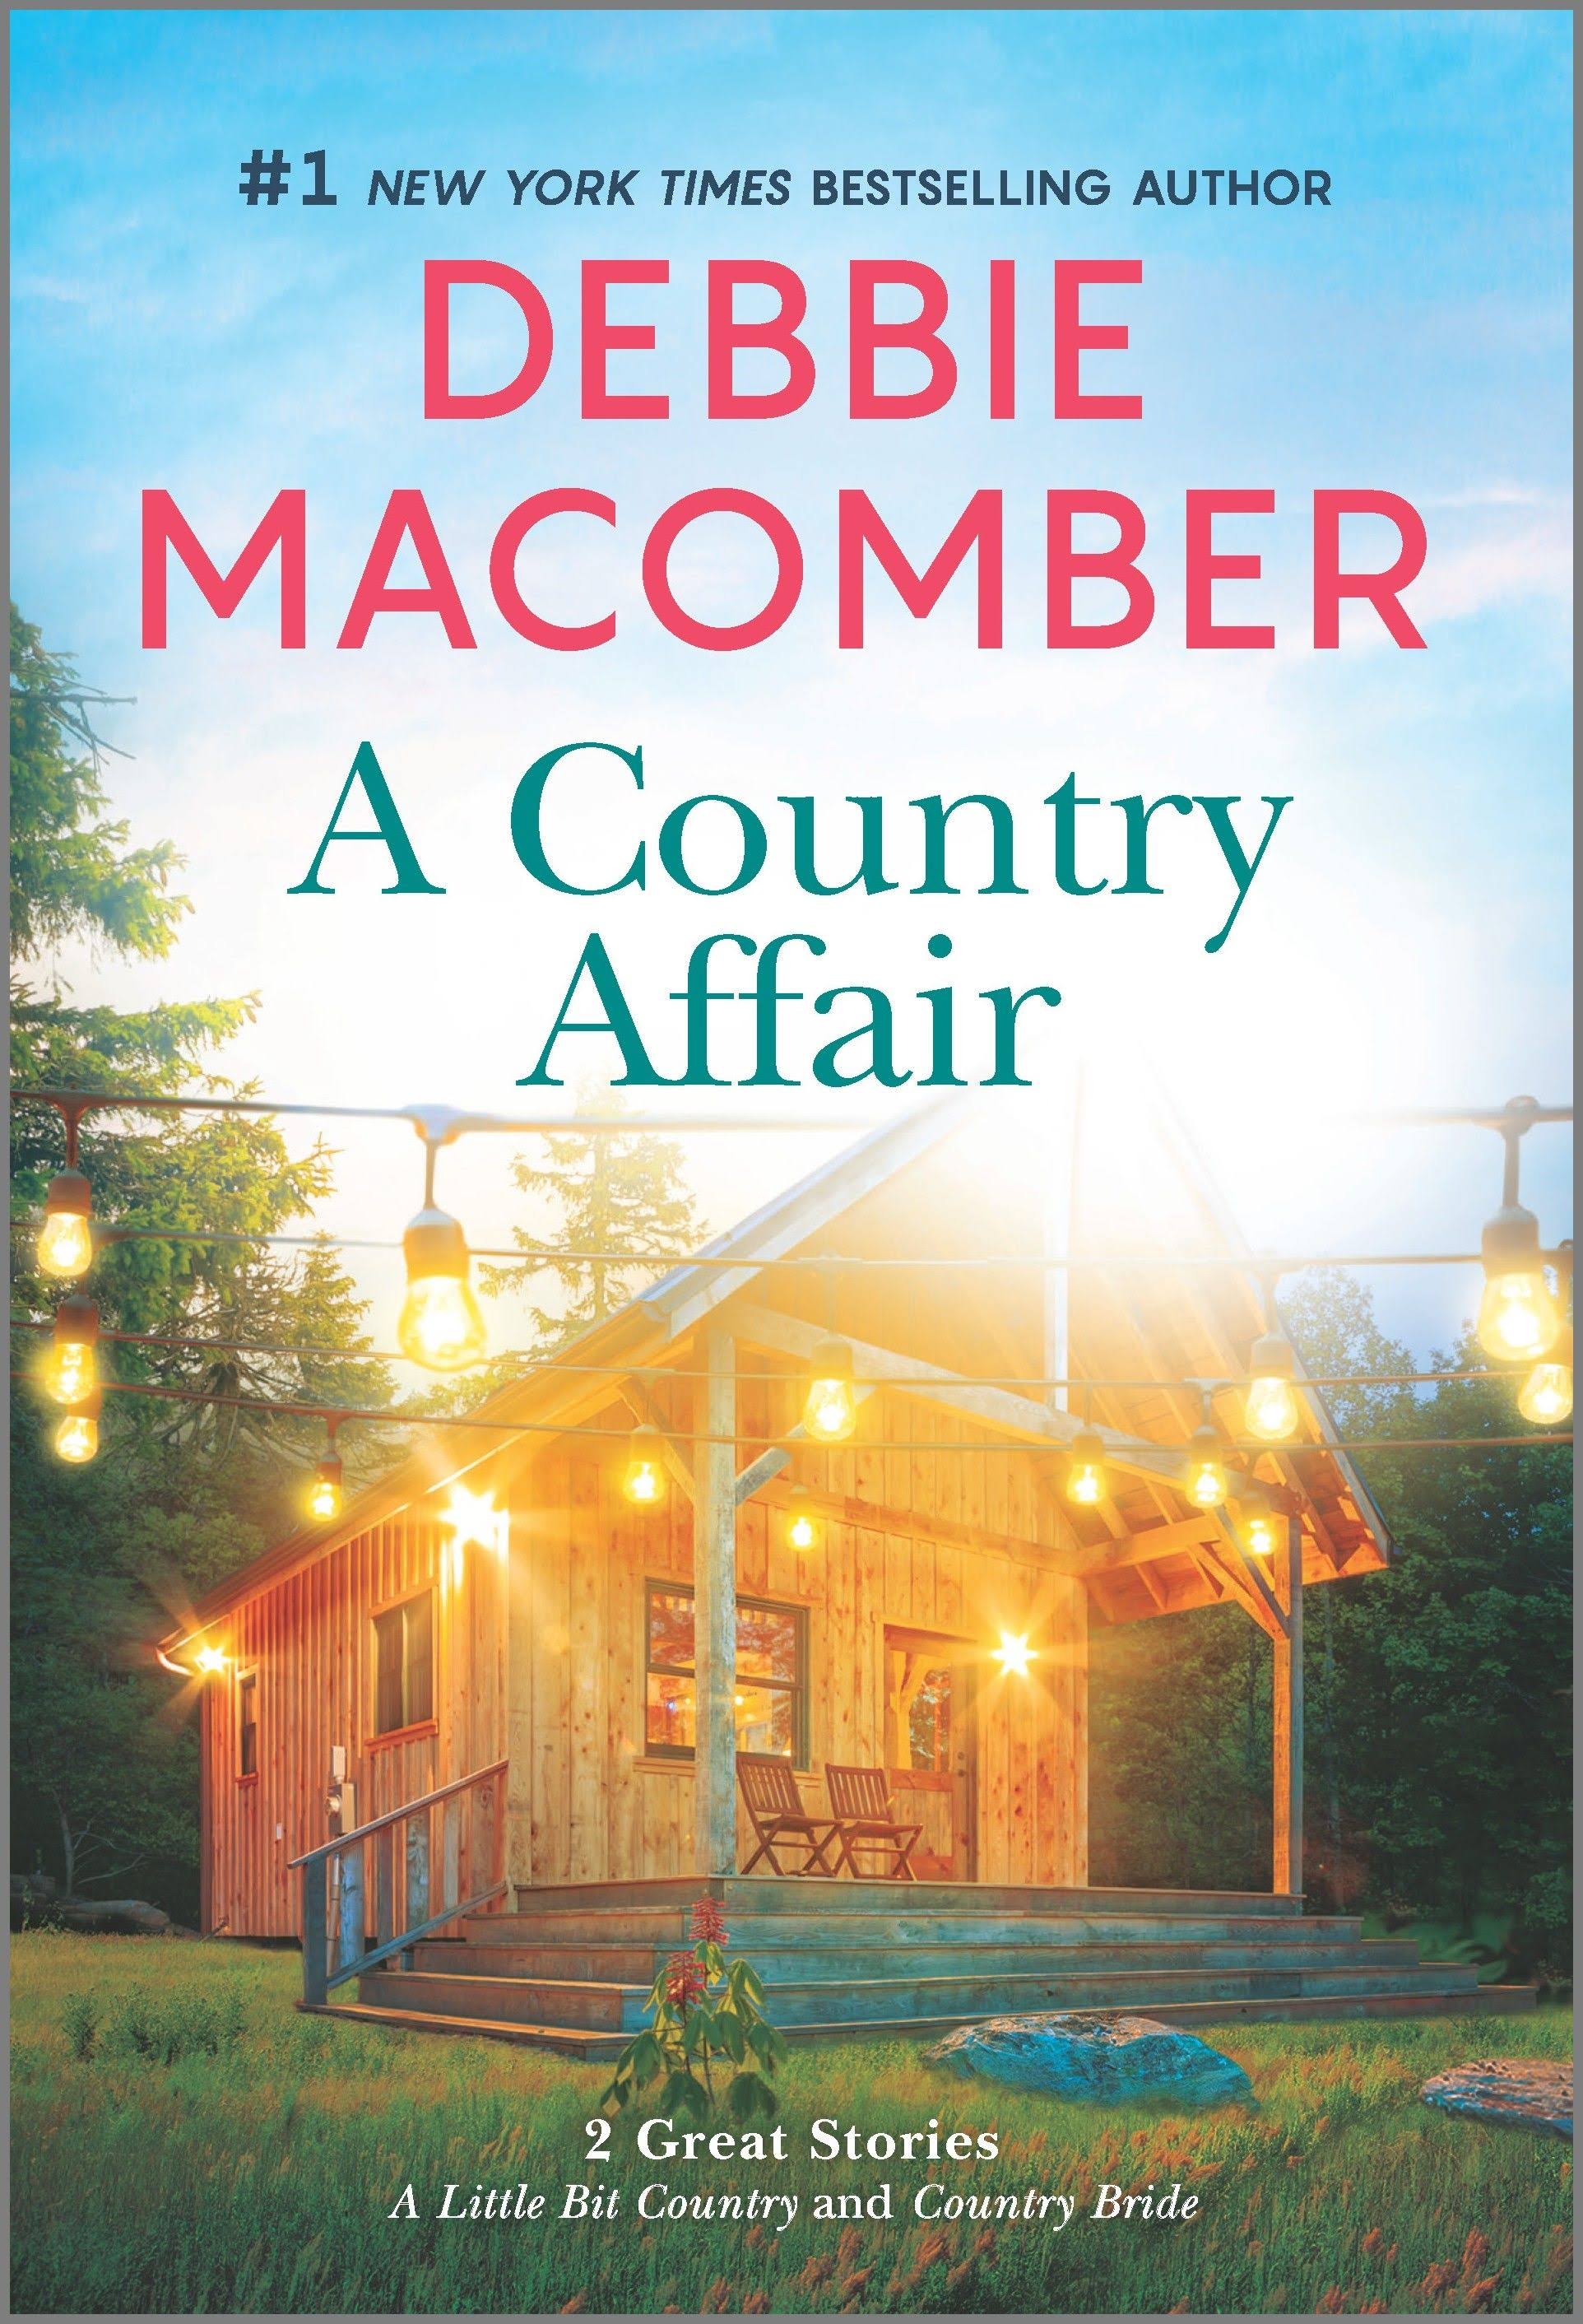 A Country Affair by DEBBIE MACOMBER